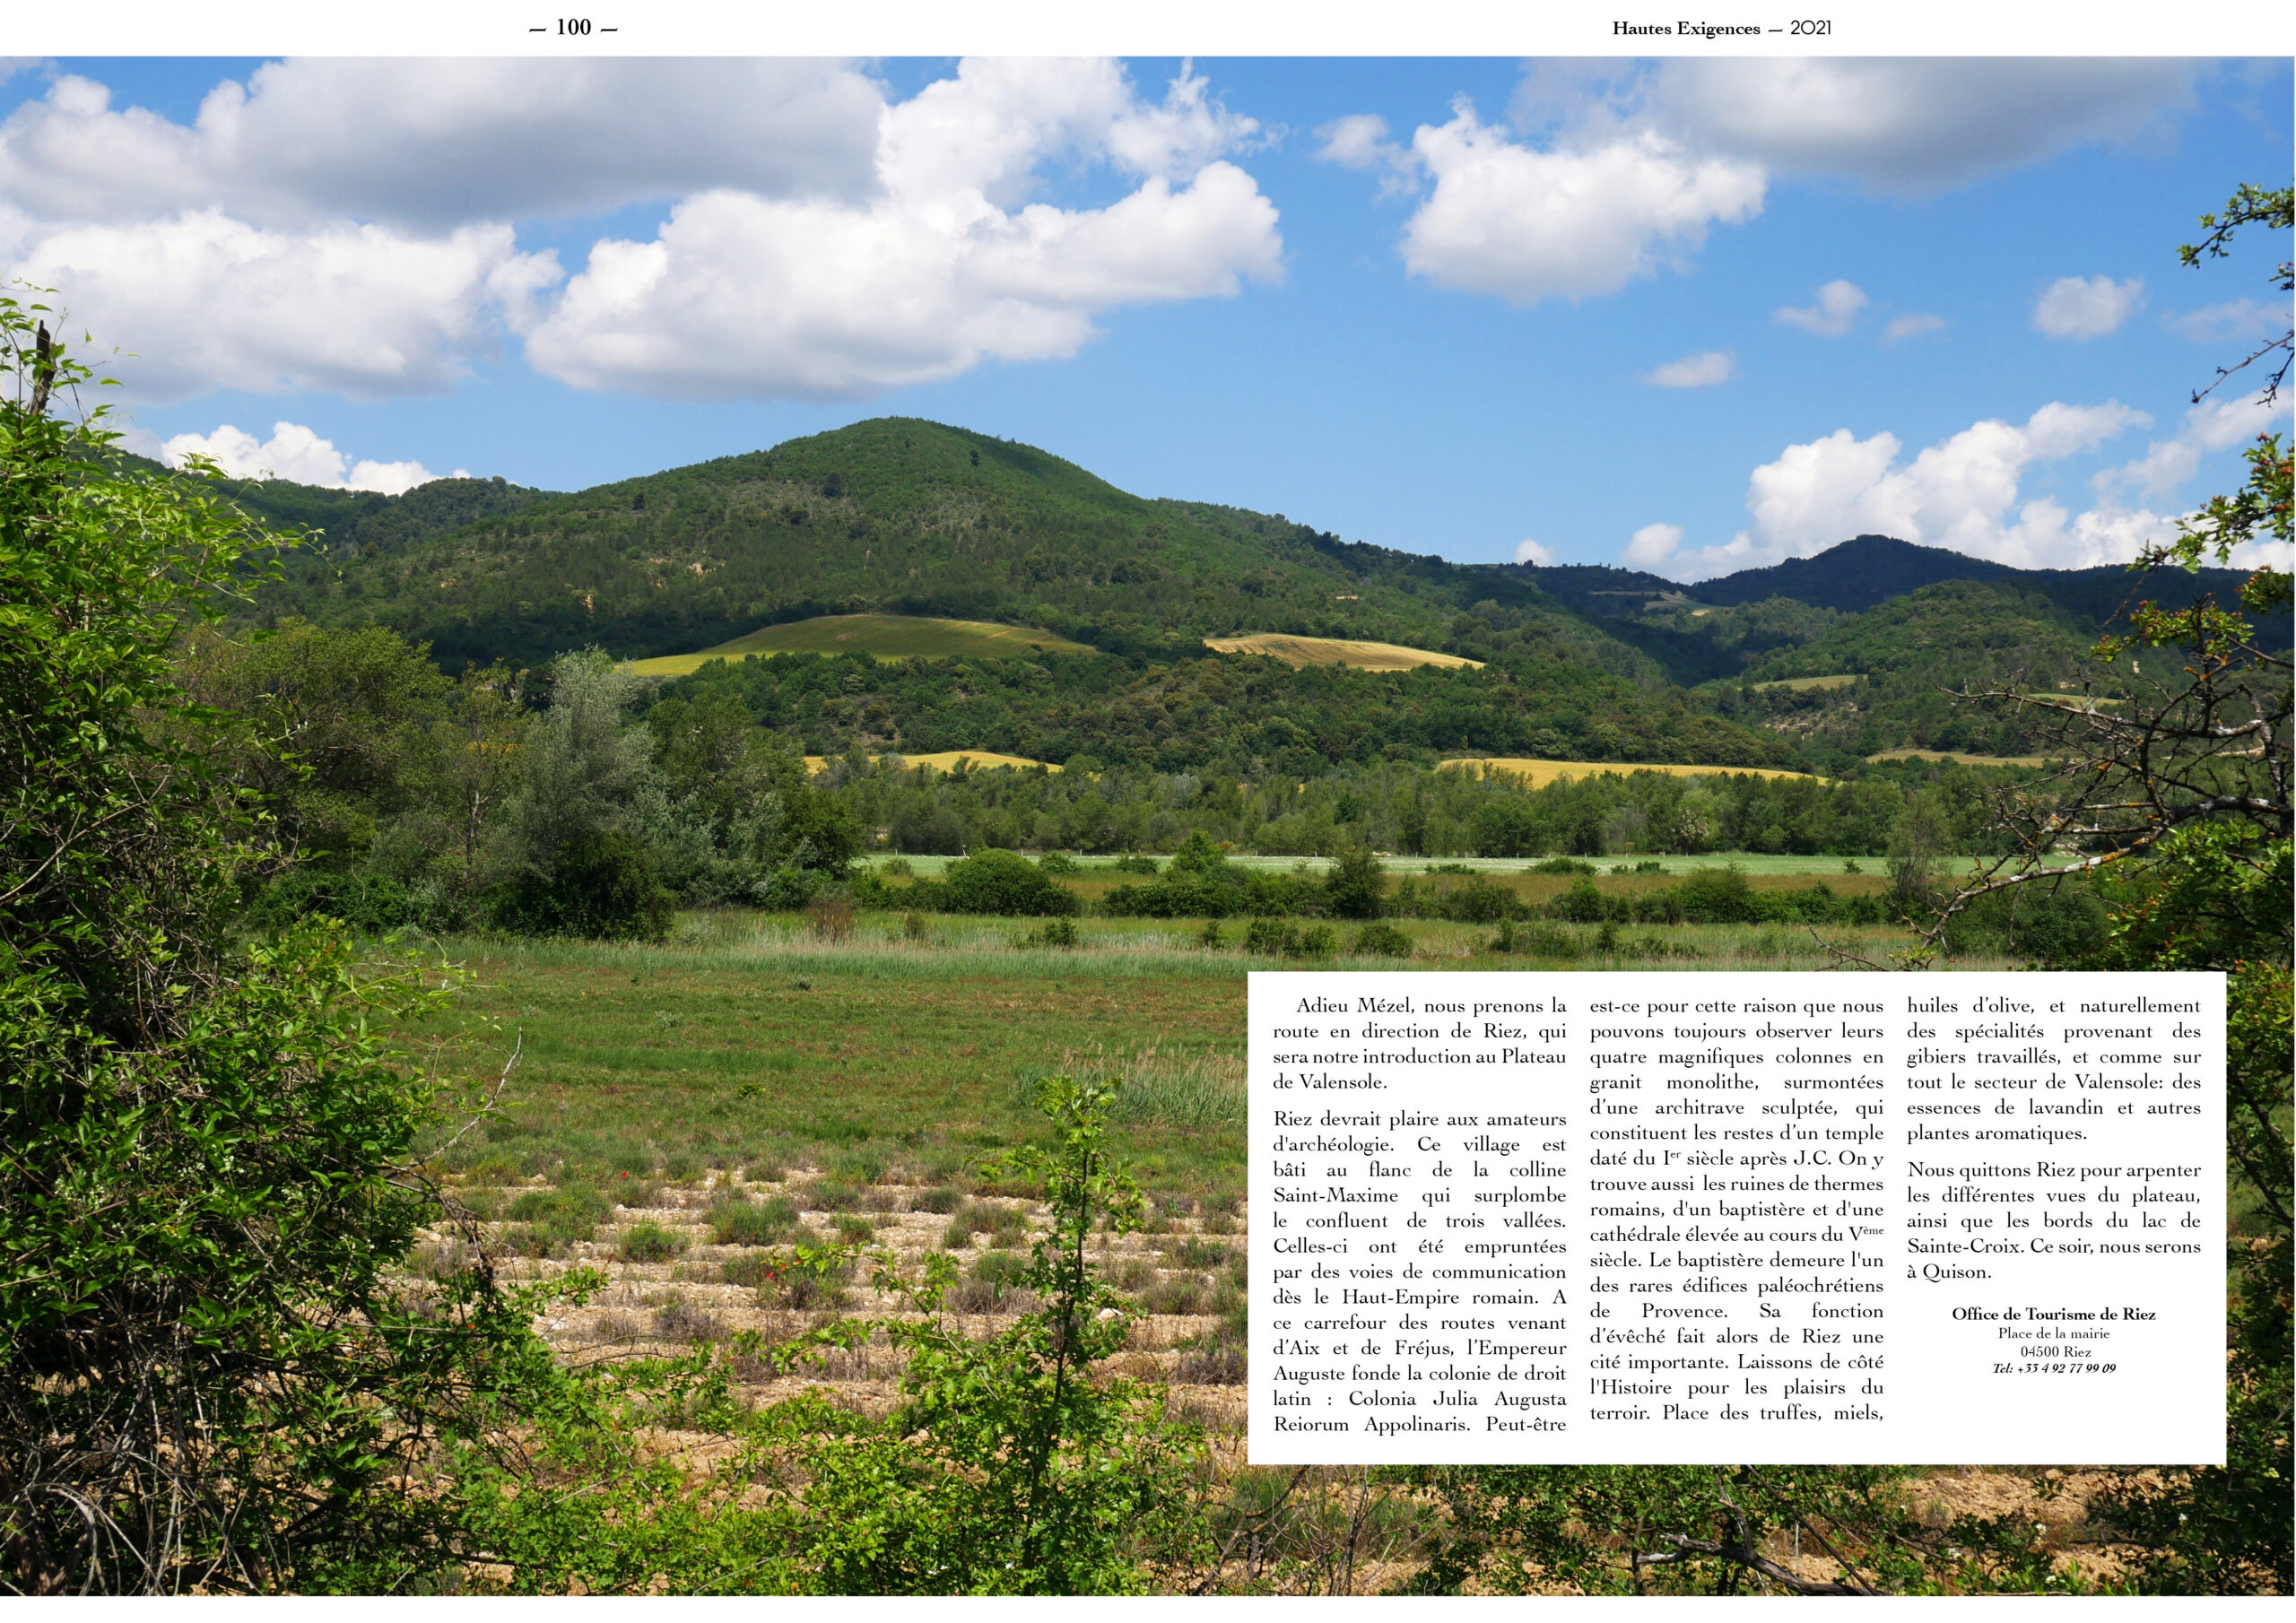 Hautes Exigences Magazine Hors Serie 2021 page 98-99